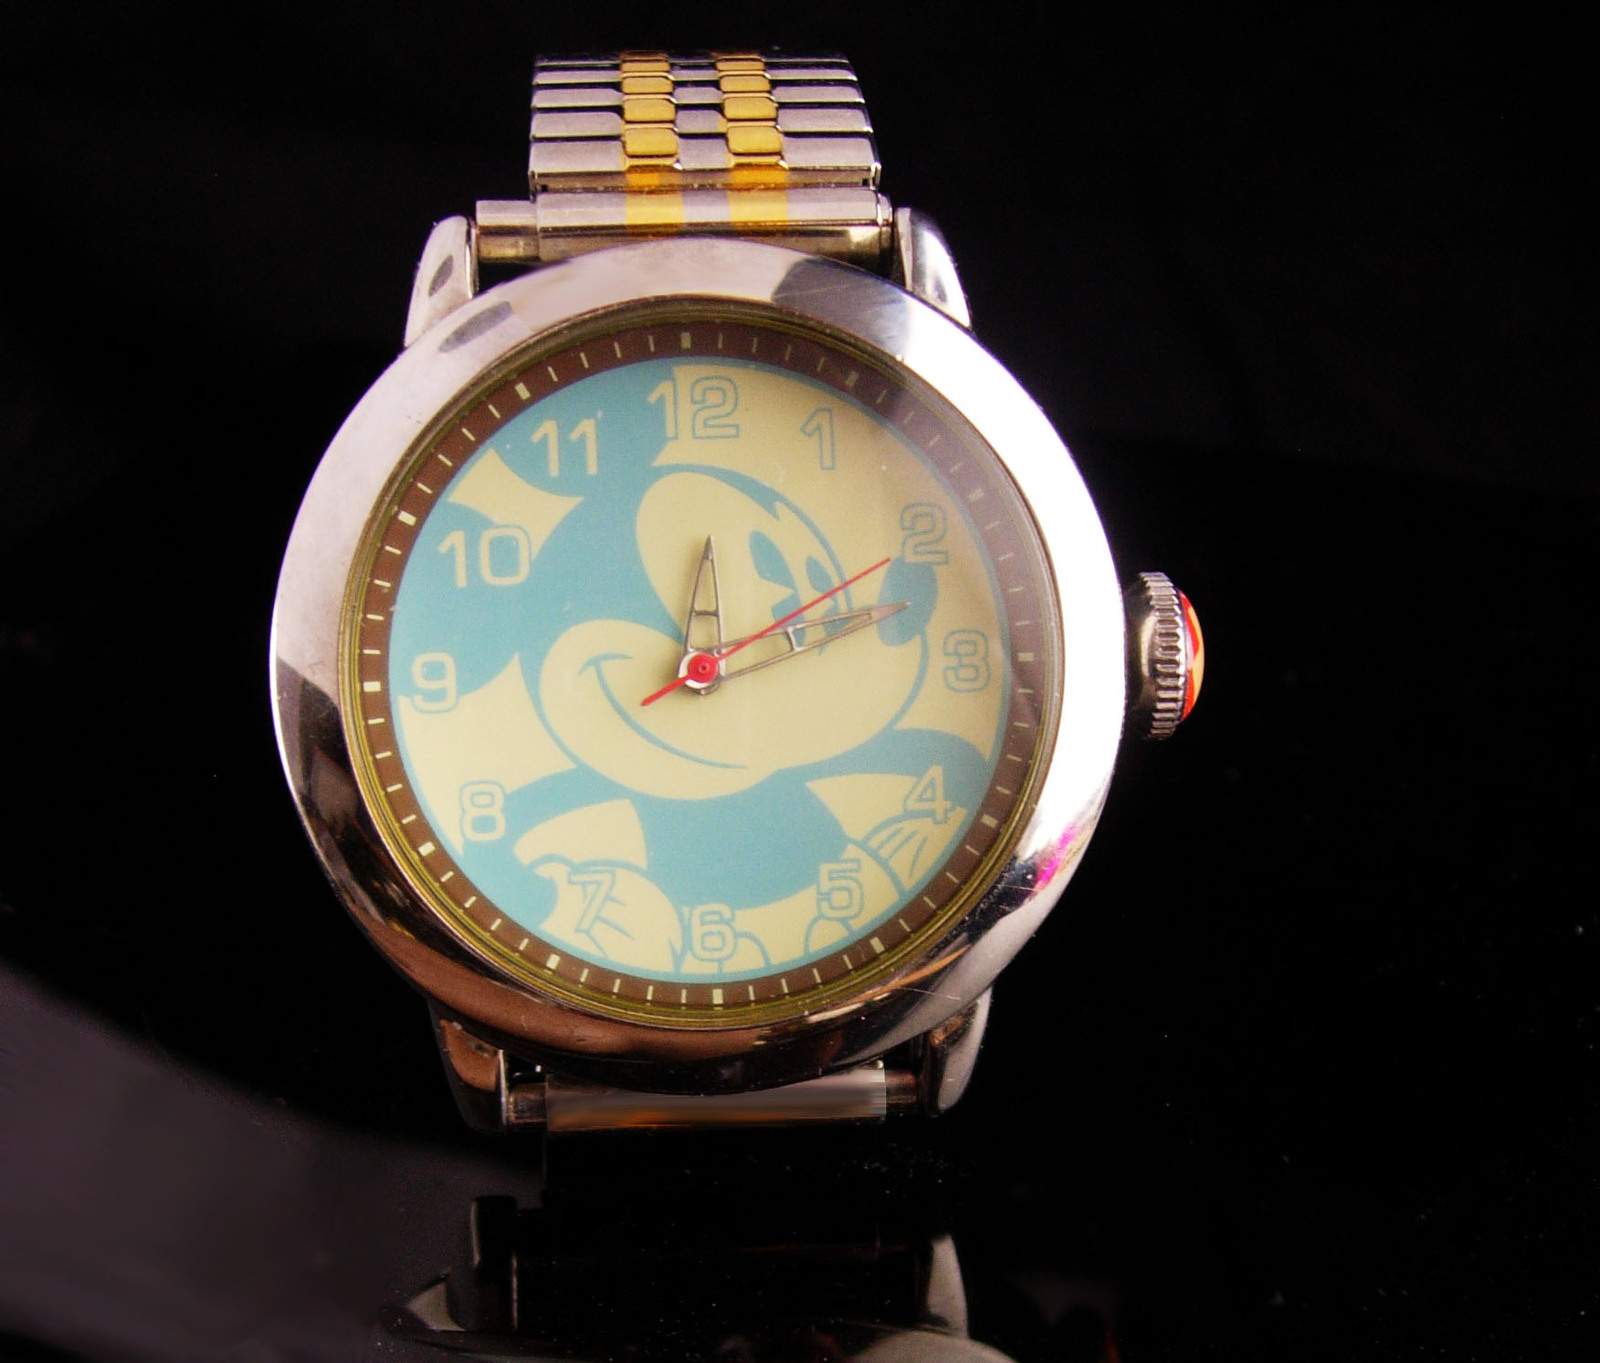 Vintage unusual mickey watch - Hadley Roma - S11 - water resistant runs well - l - $75.00